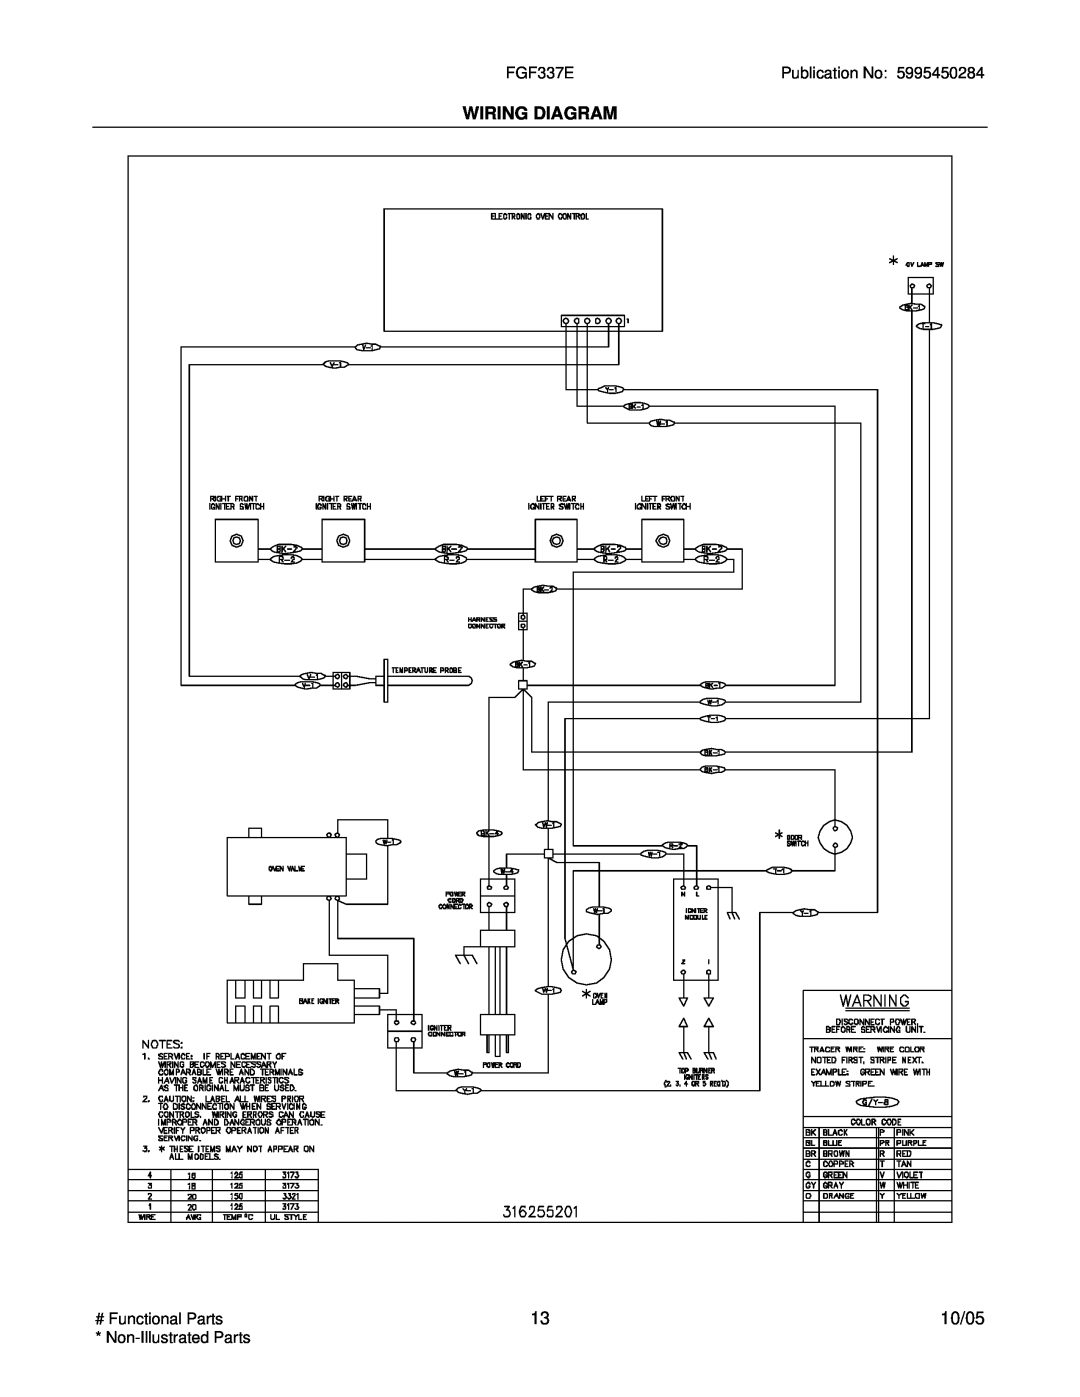 Frigidaire FGF337E installation instructions Wiring Diagram, 10/05, Publication No 